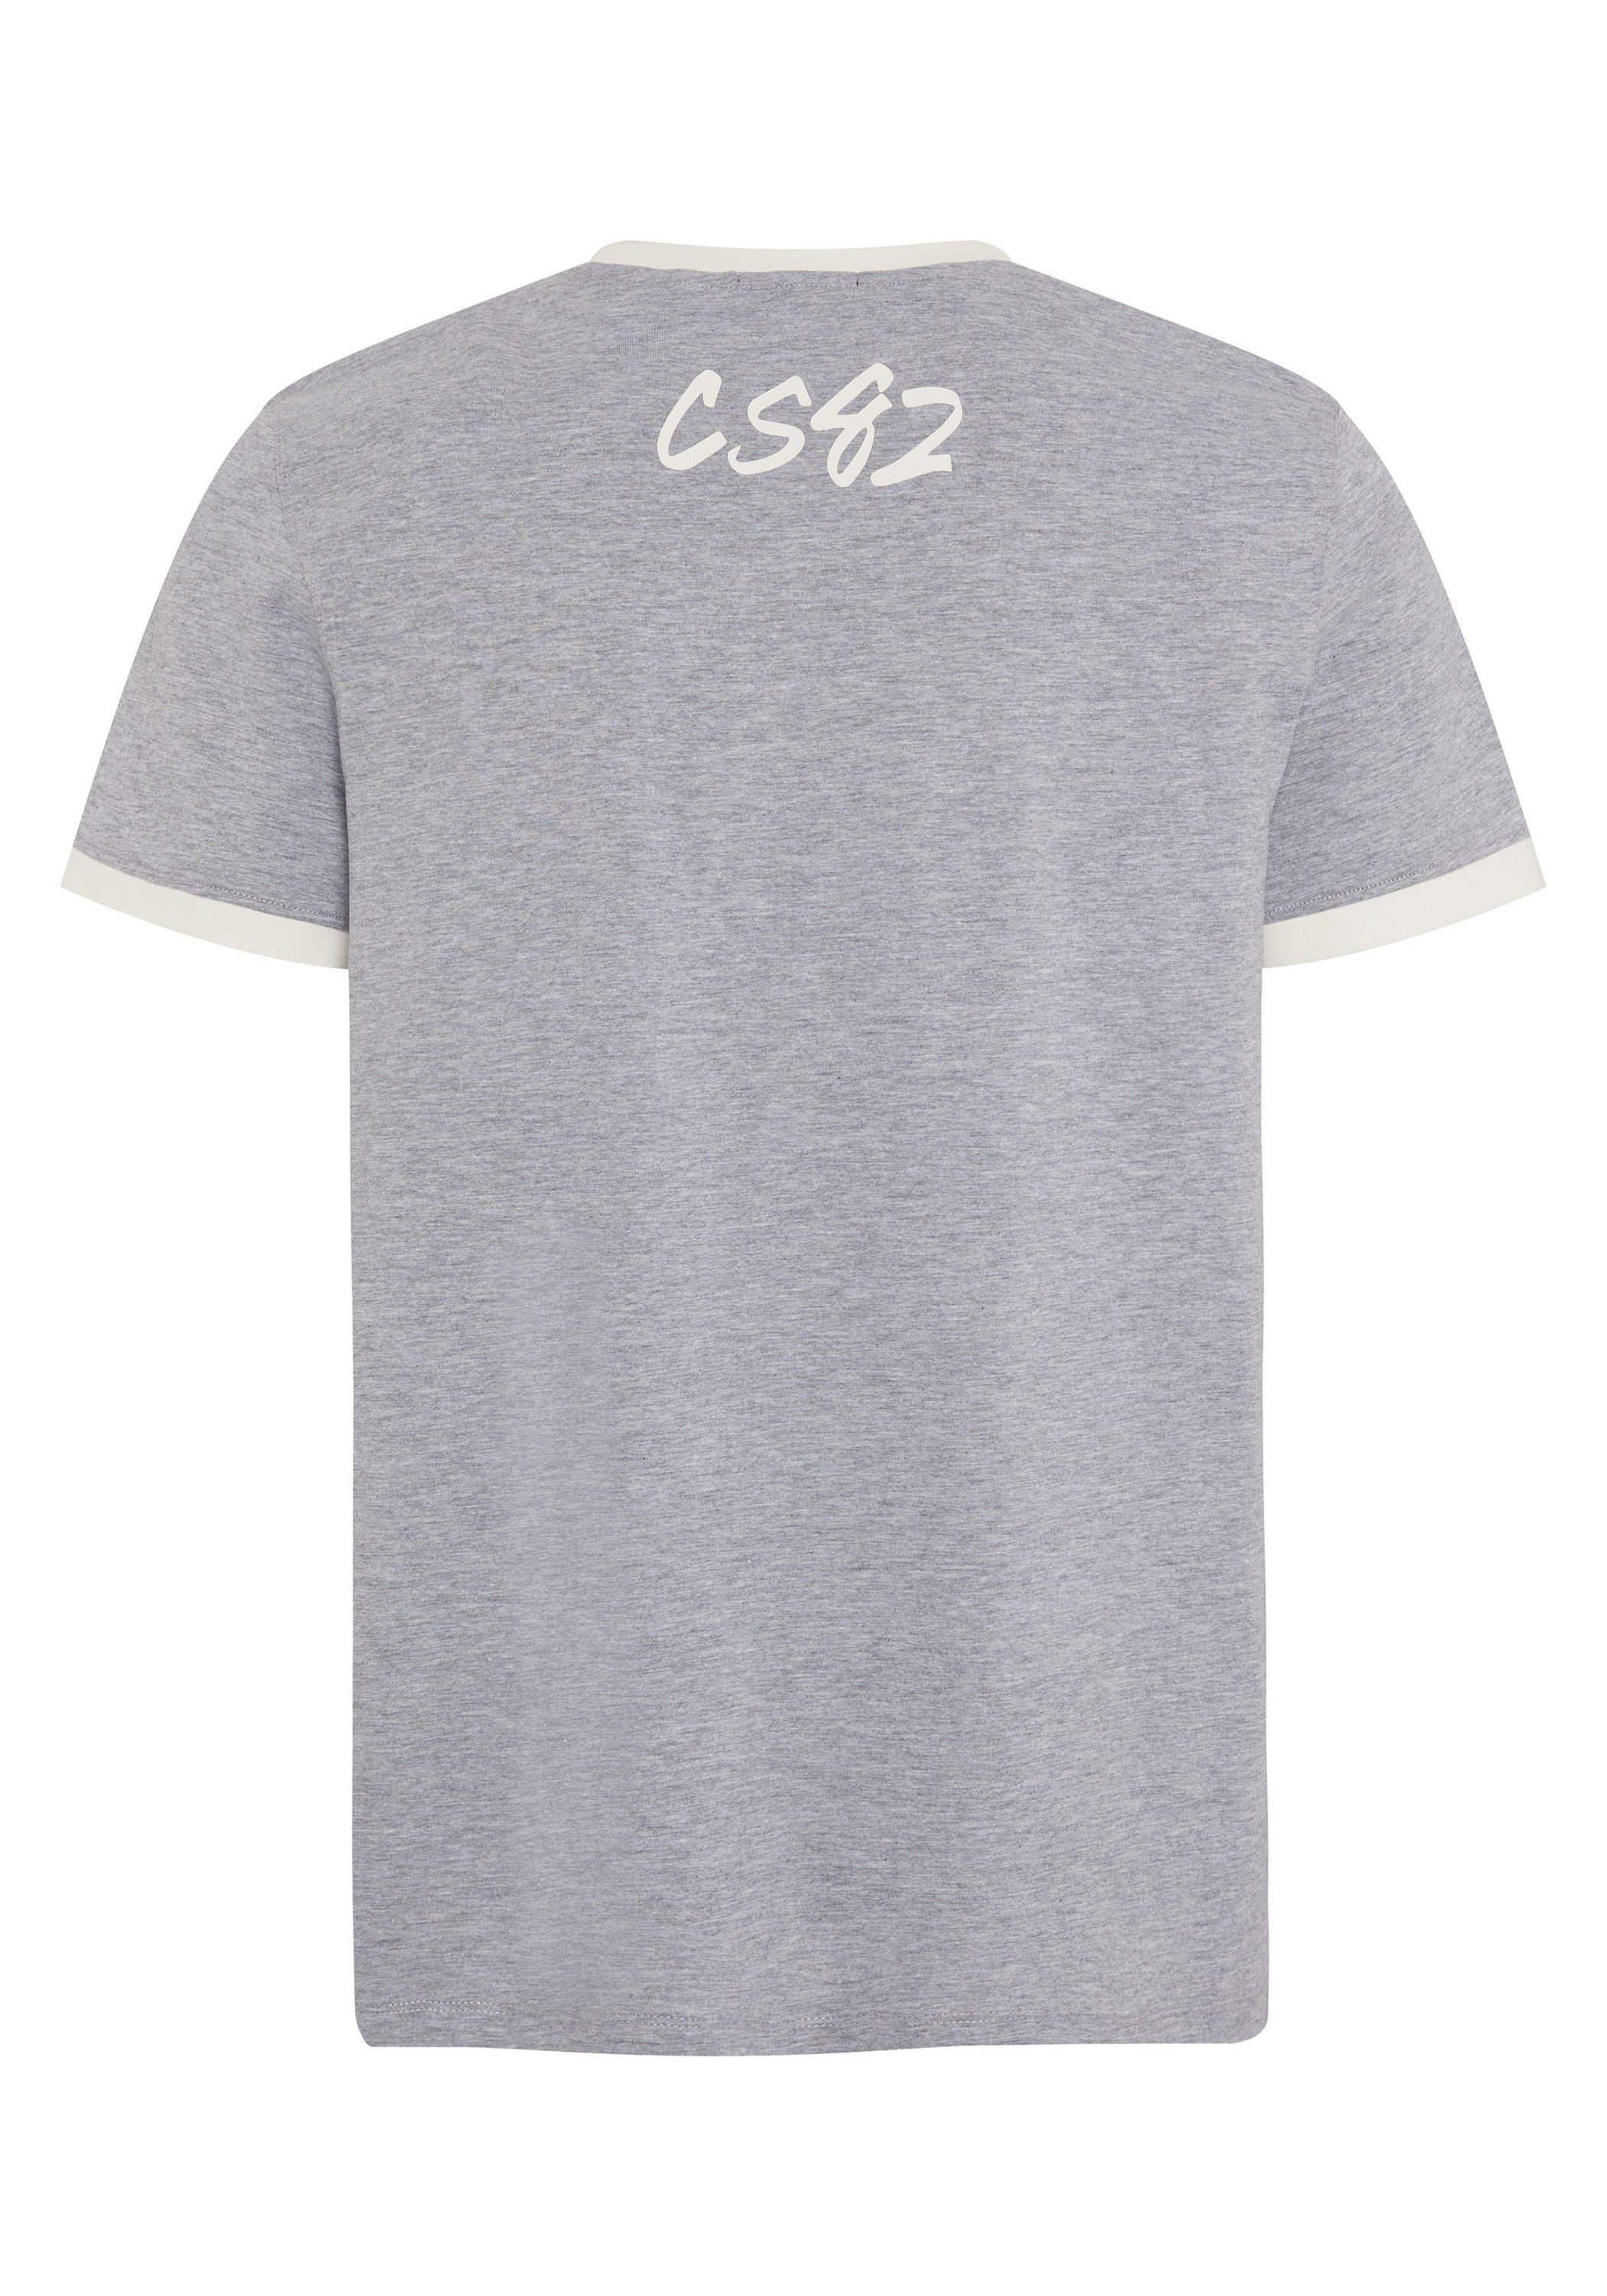 Label-Print Shirt Print-Shirt Neutral Chiemsee Gray Jersey 17-4402M 1 aus mit Melange